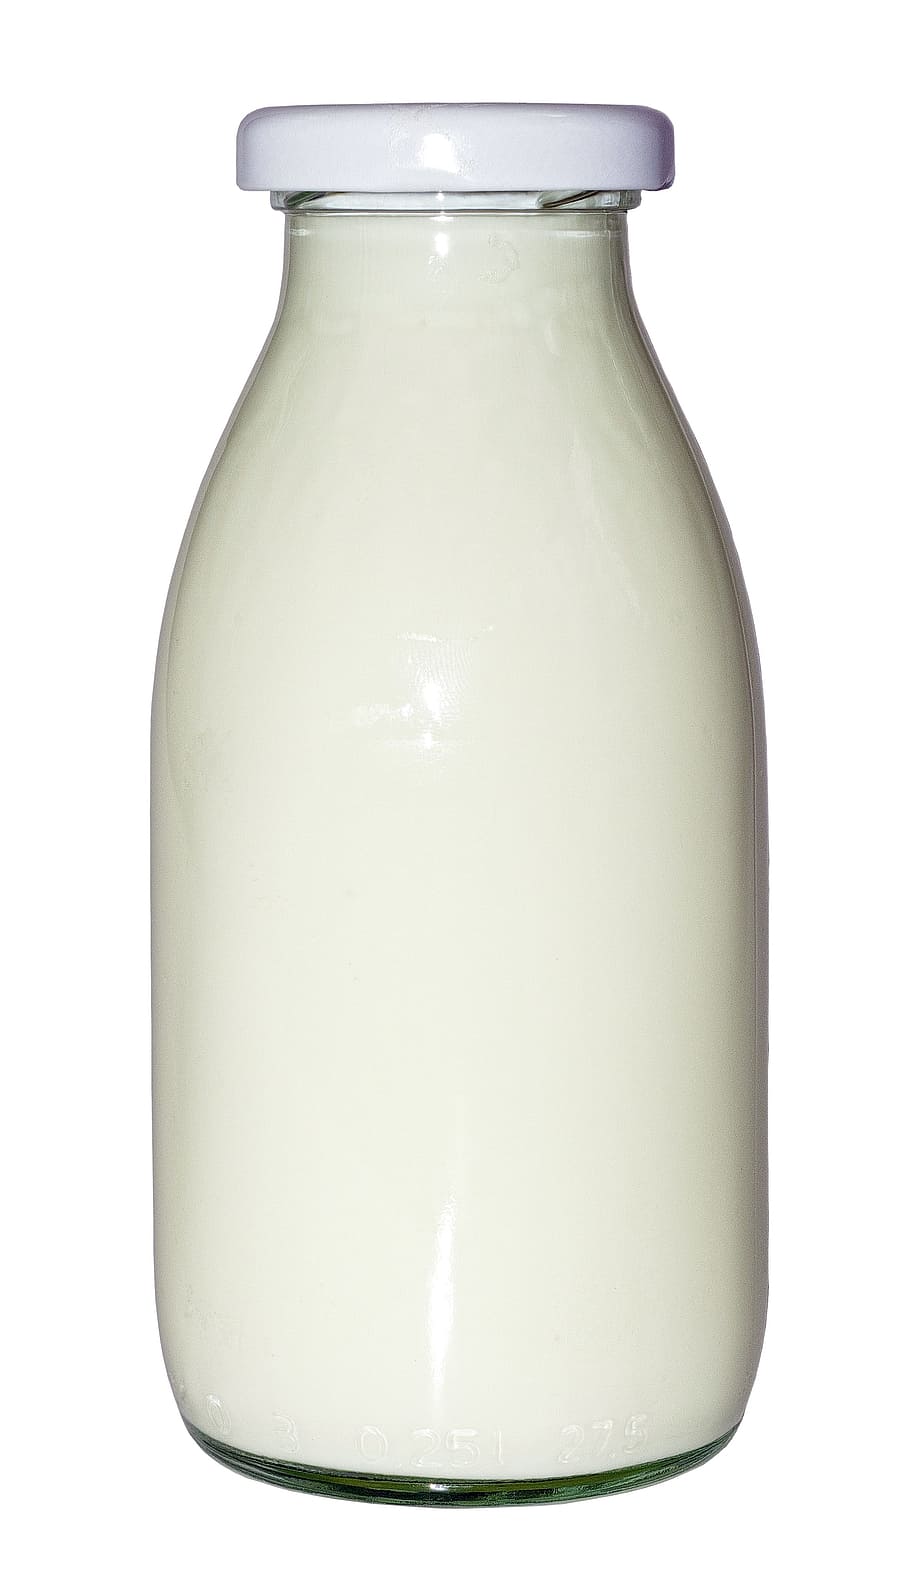 jelas, botol kaca, putih, cairan, botol susu, susu, botol, gelas, minuman, penyegaran